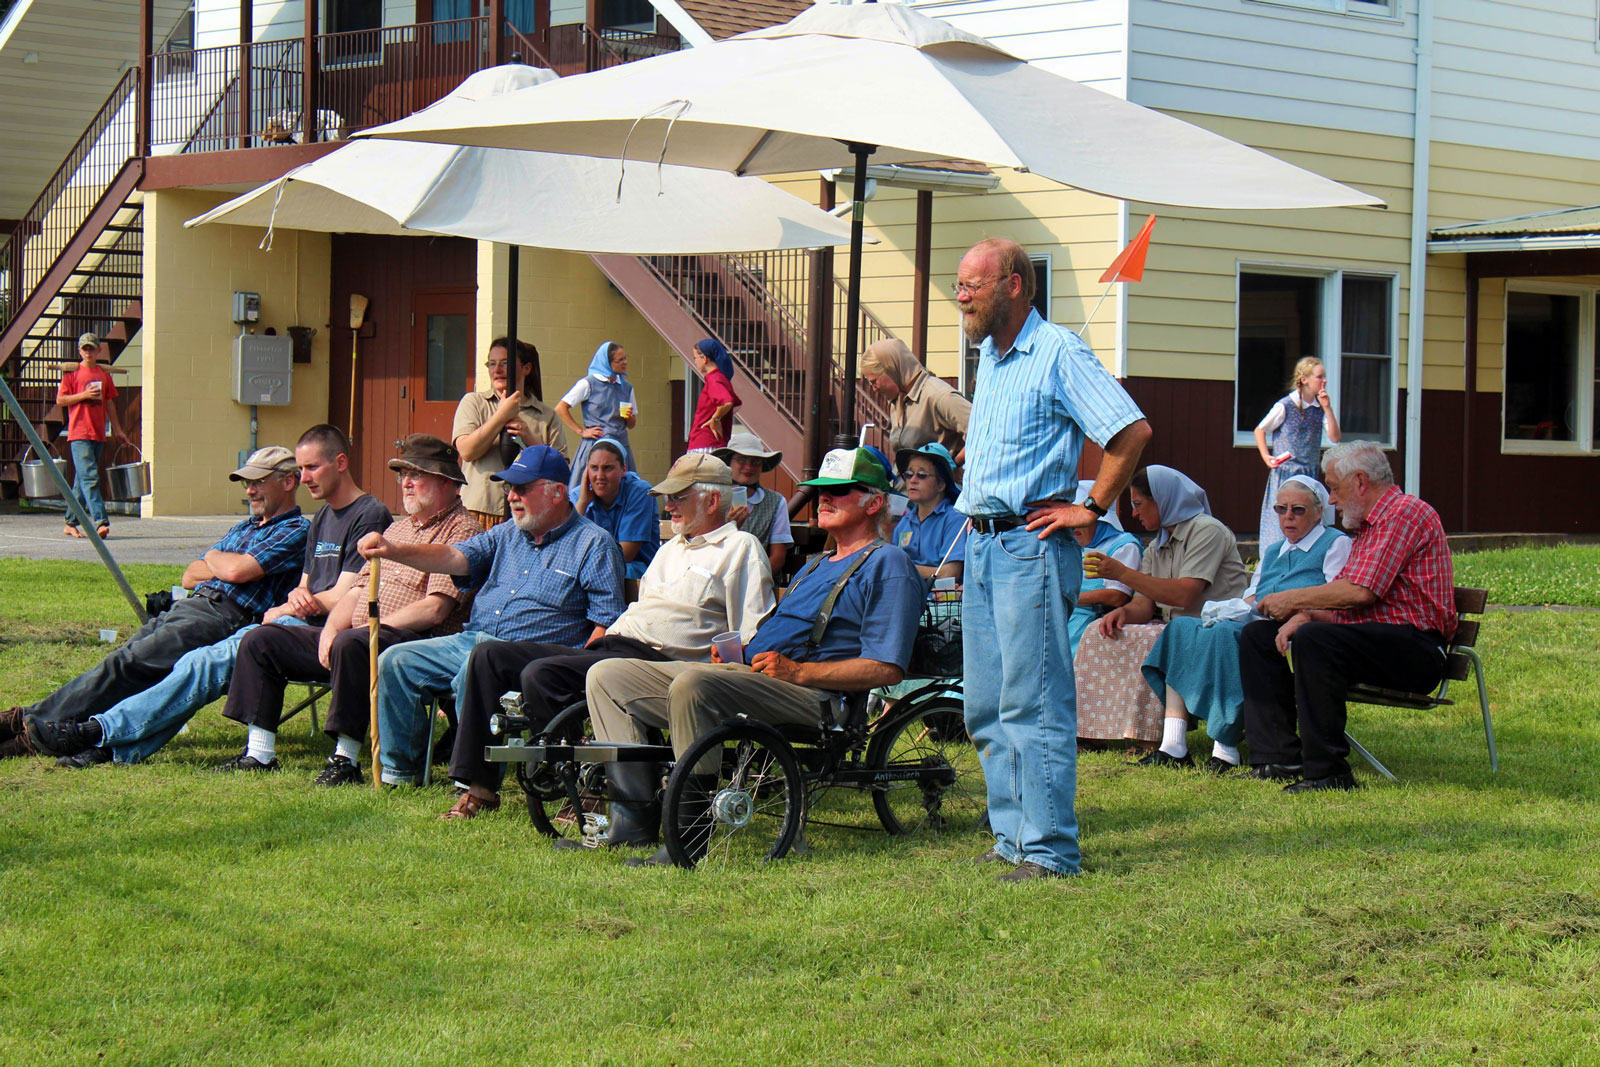 Maple Ridge Bruderhof - Foundation for Intentional Community